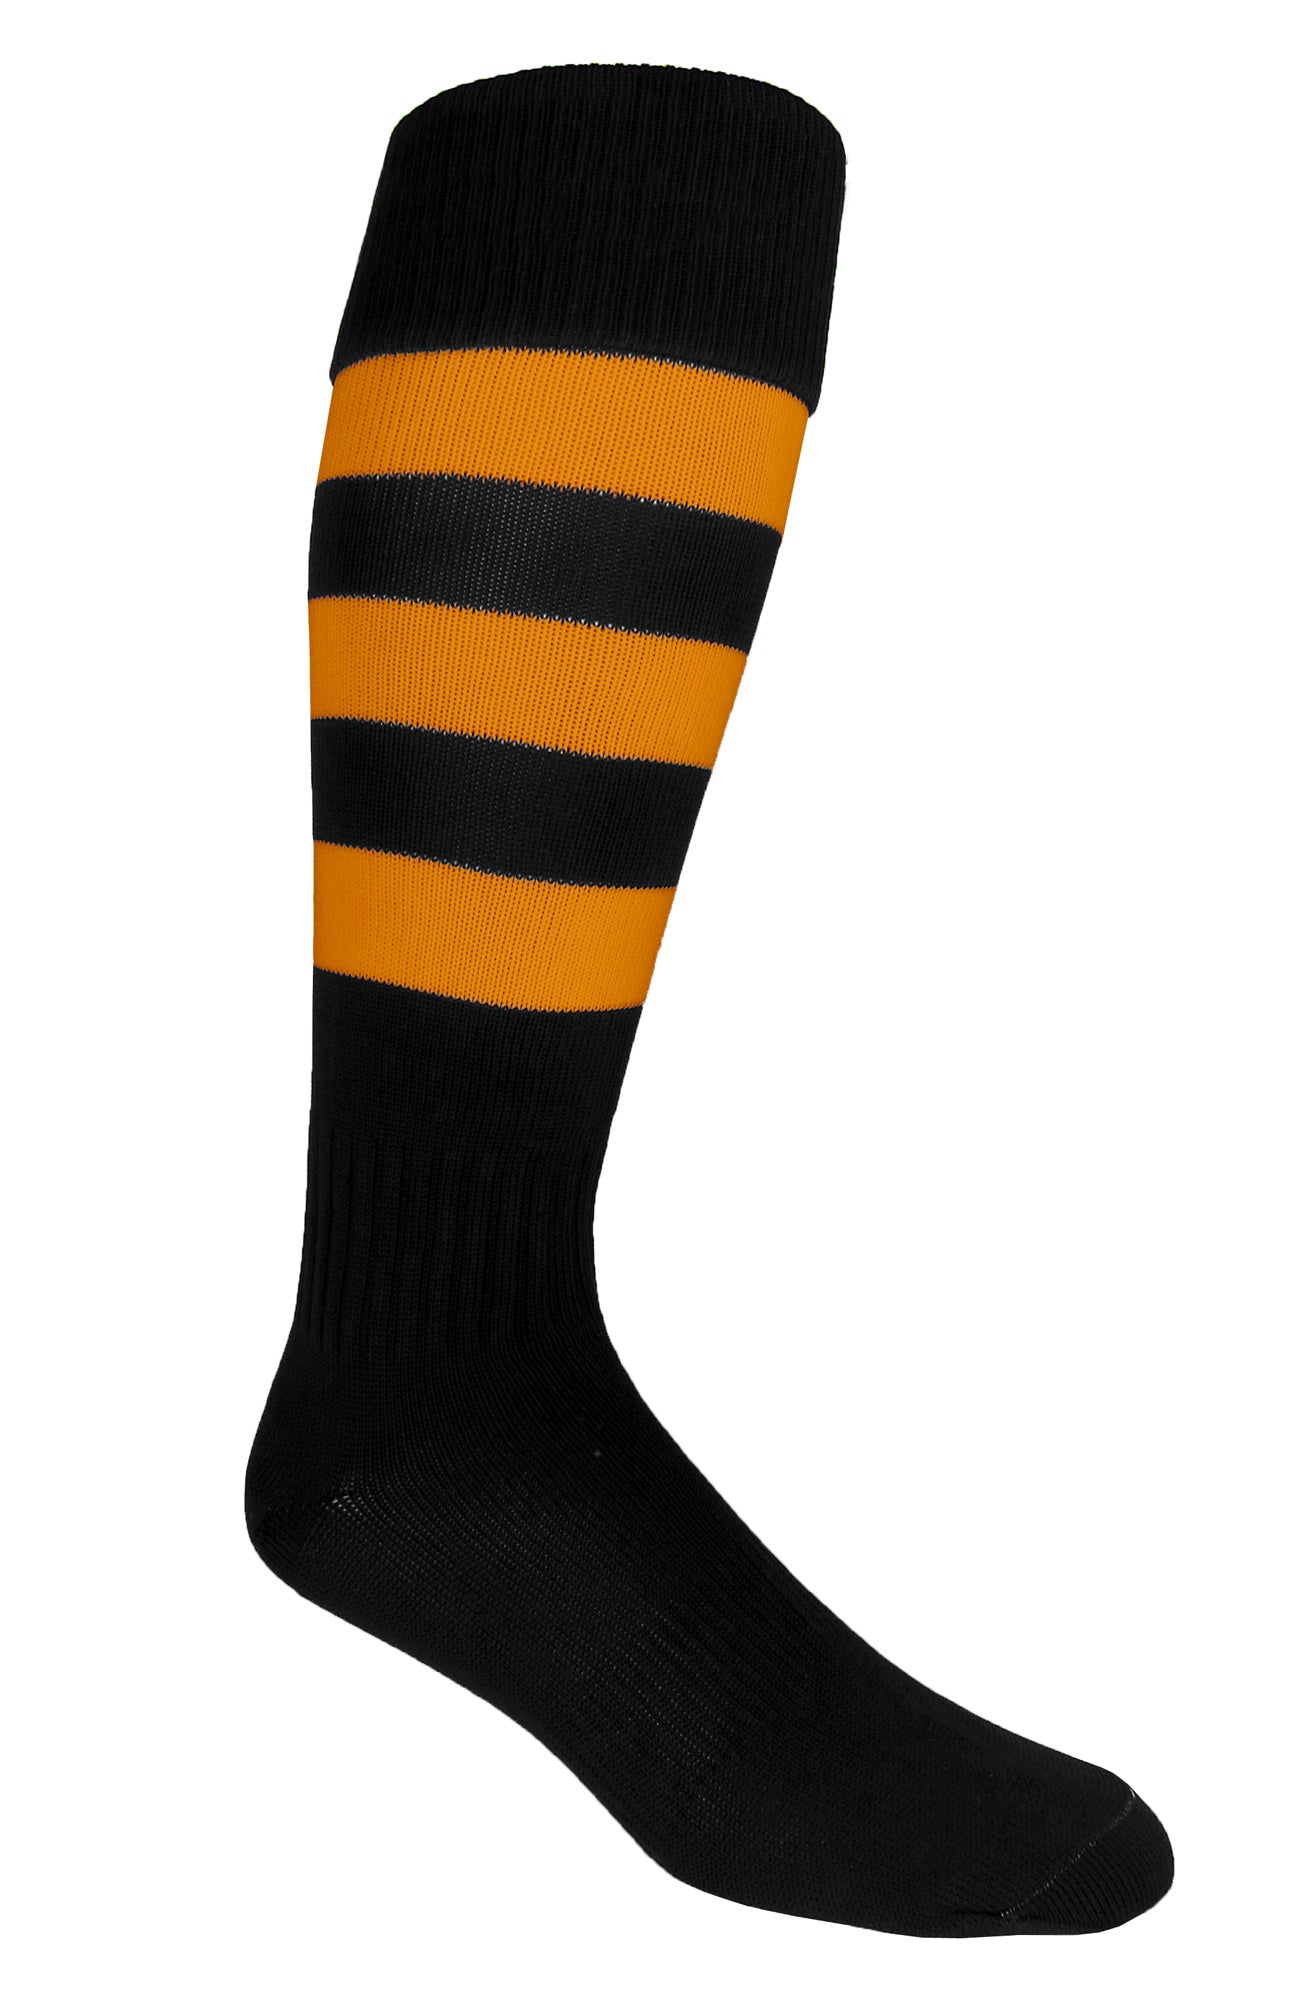 Pearsox Euro Bumble Bee Striped Knee High Athletic Socks